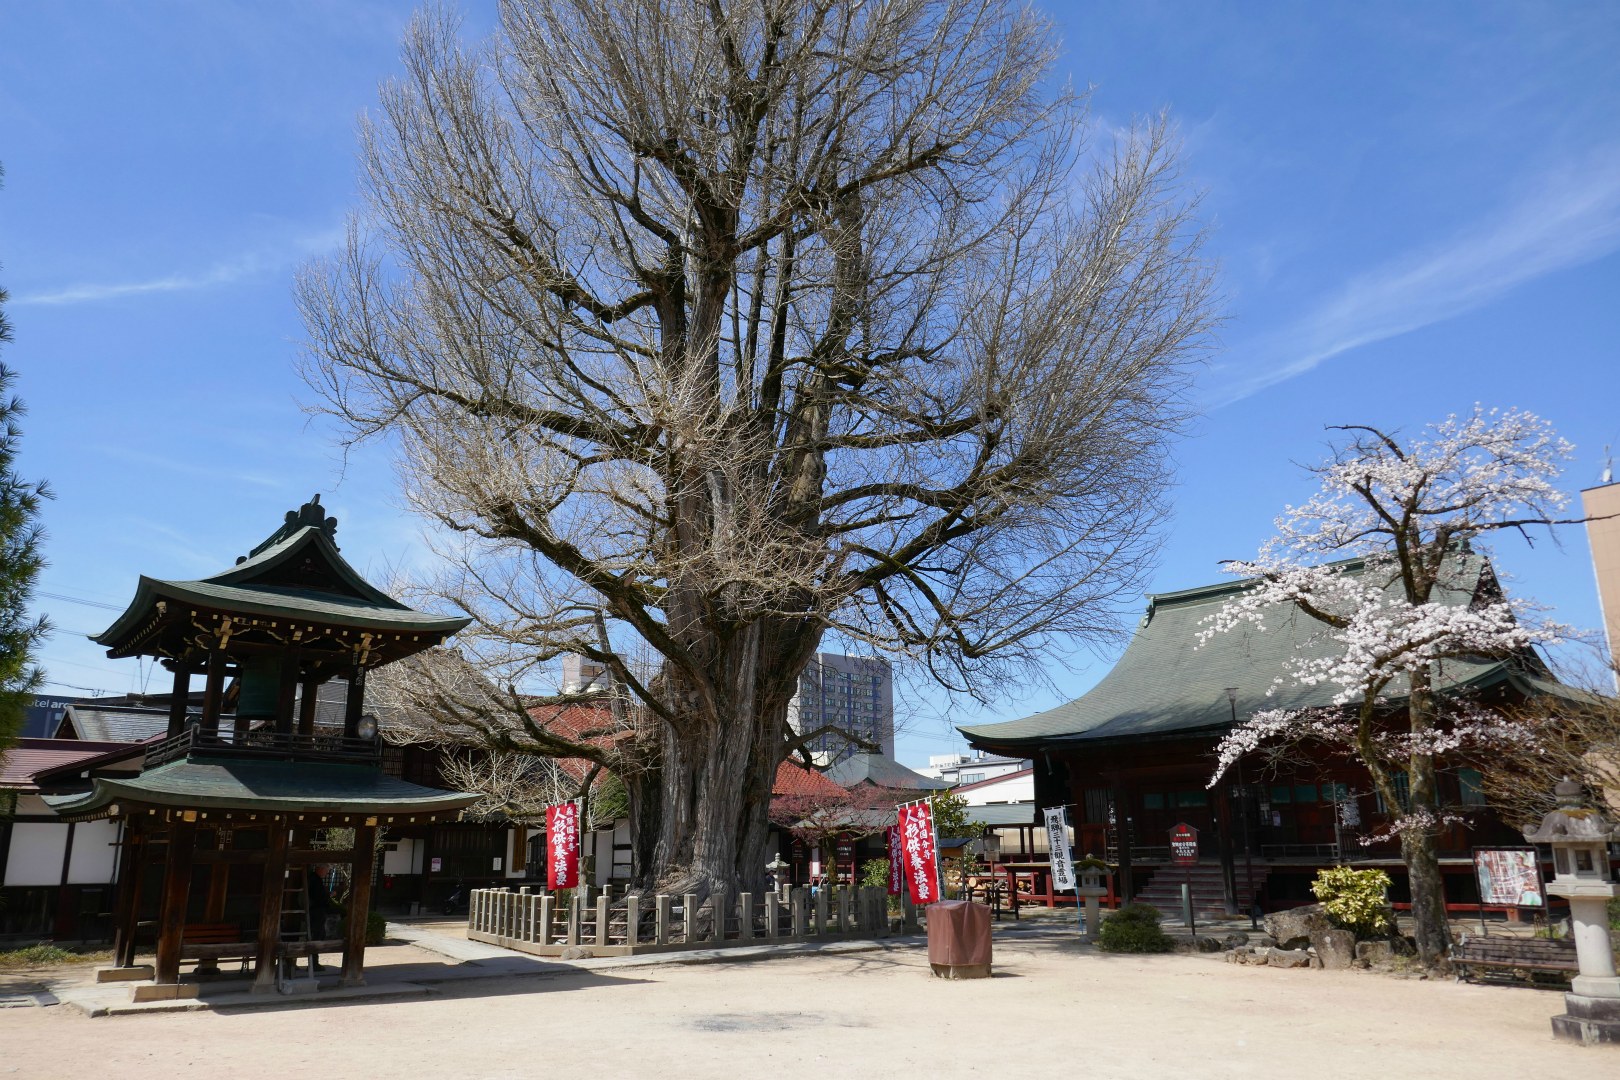 1200 year old Ginko Tree, Hida Kokubunji Temple, Takayama